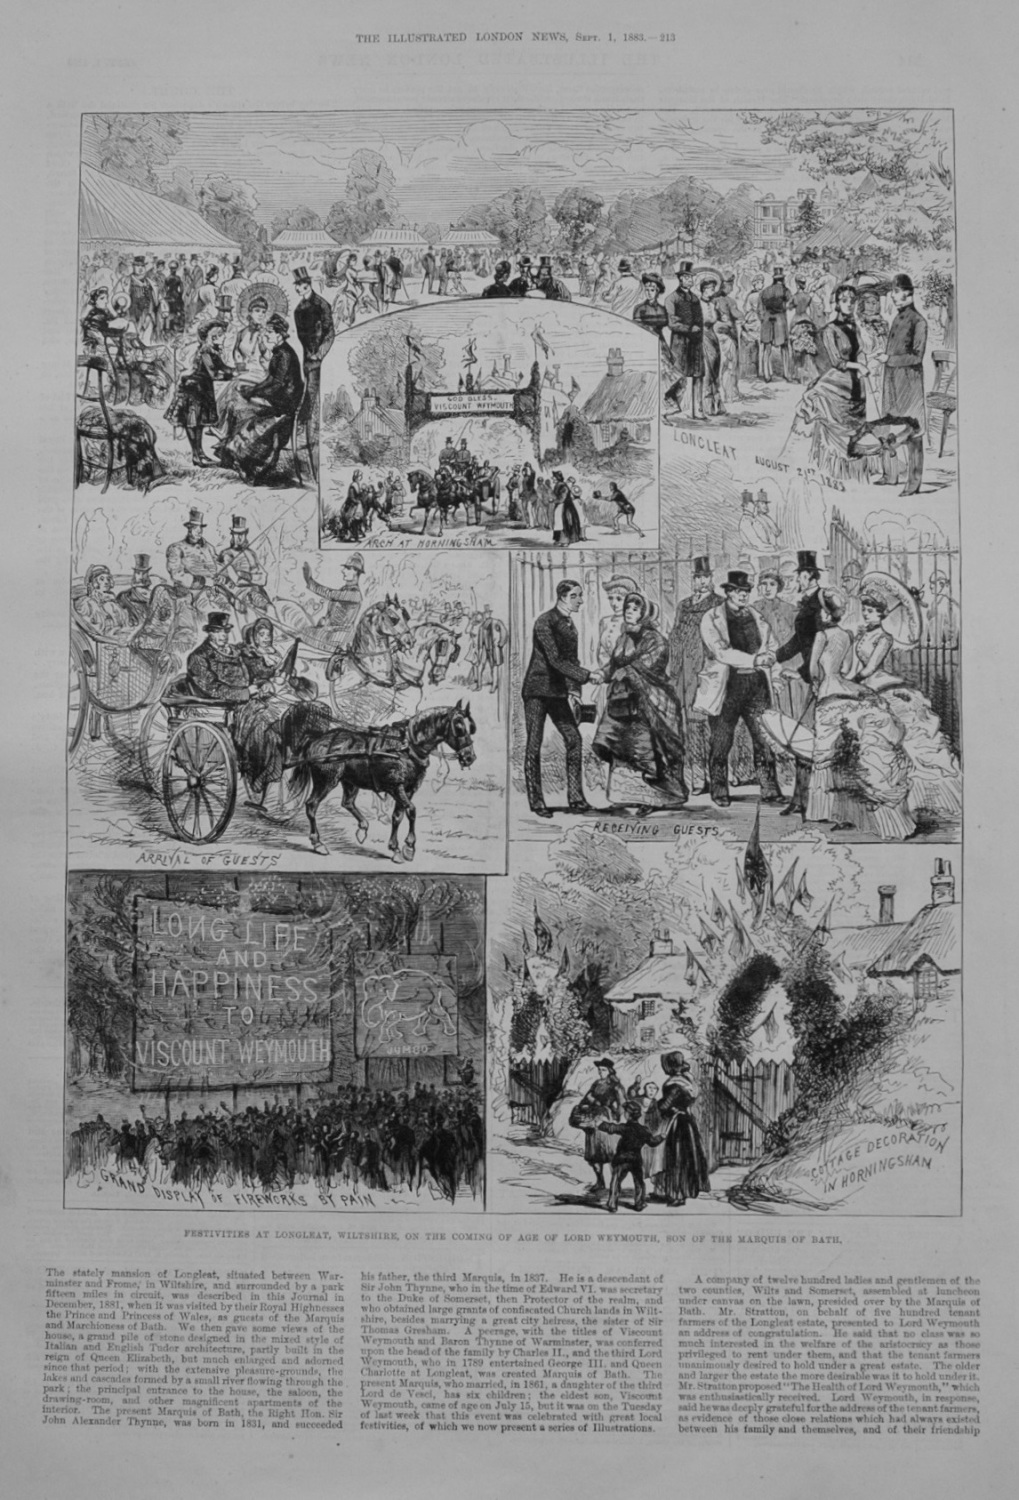 Festivities at Longleat - 1883